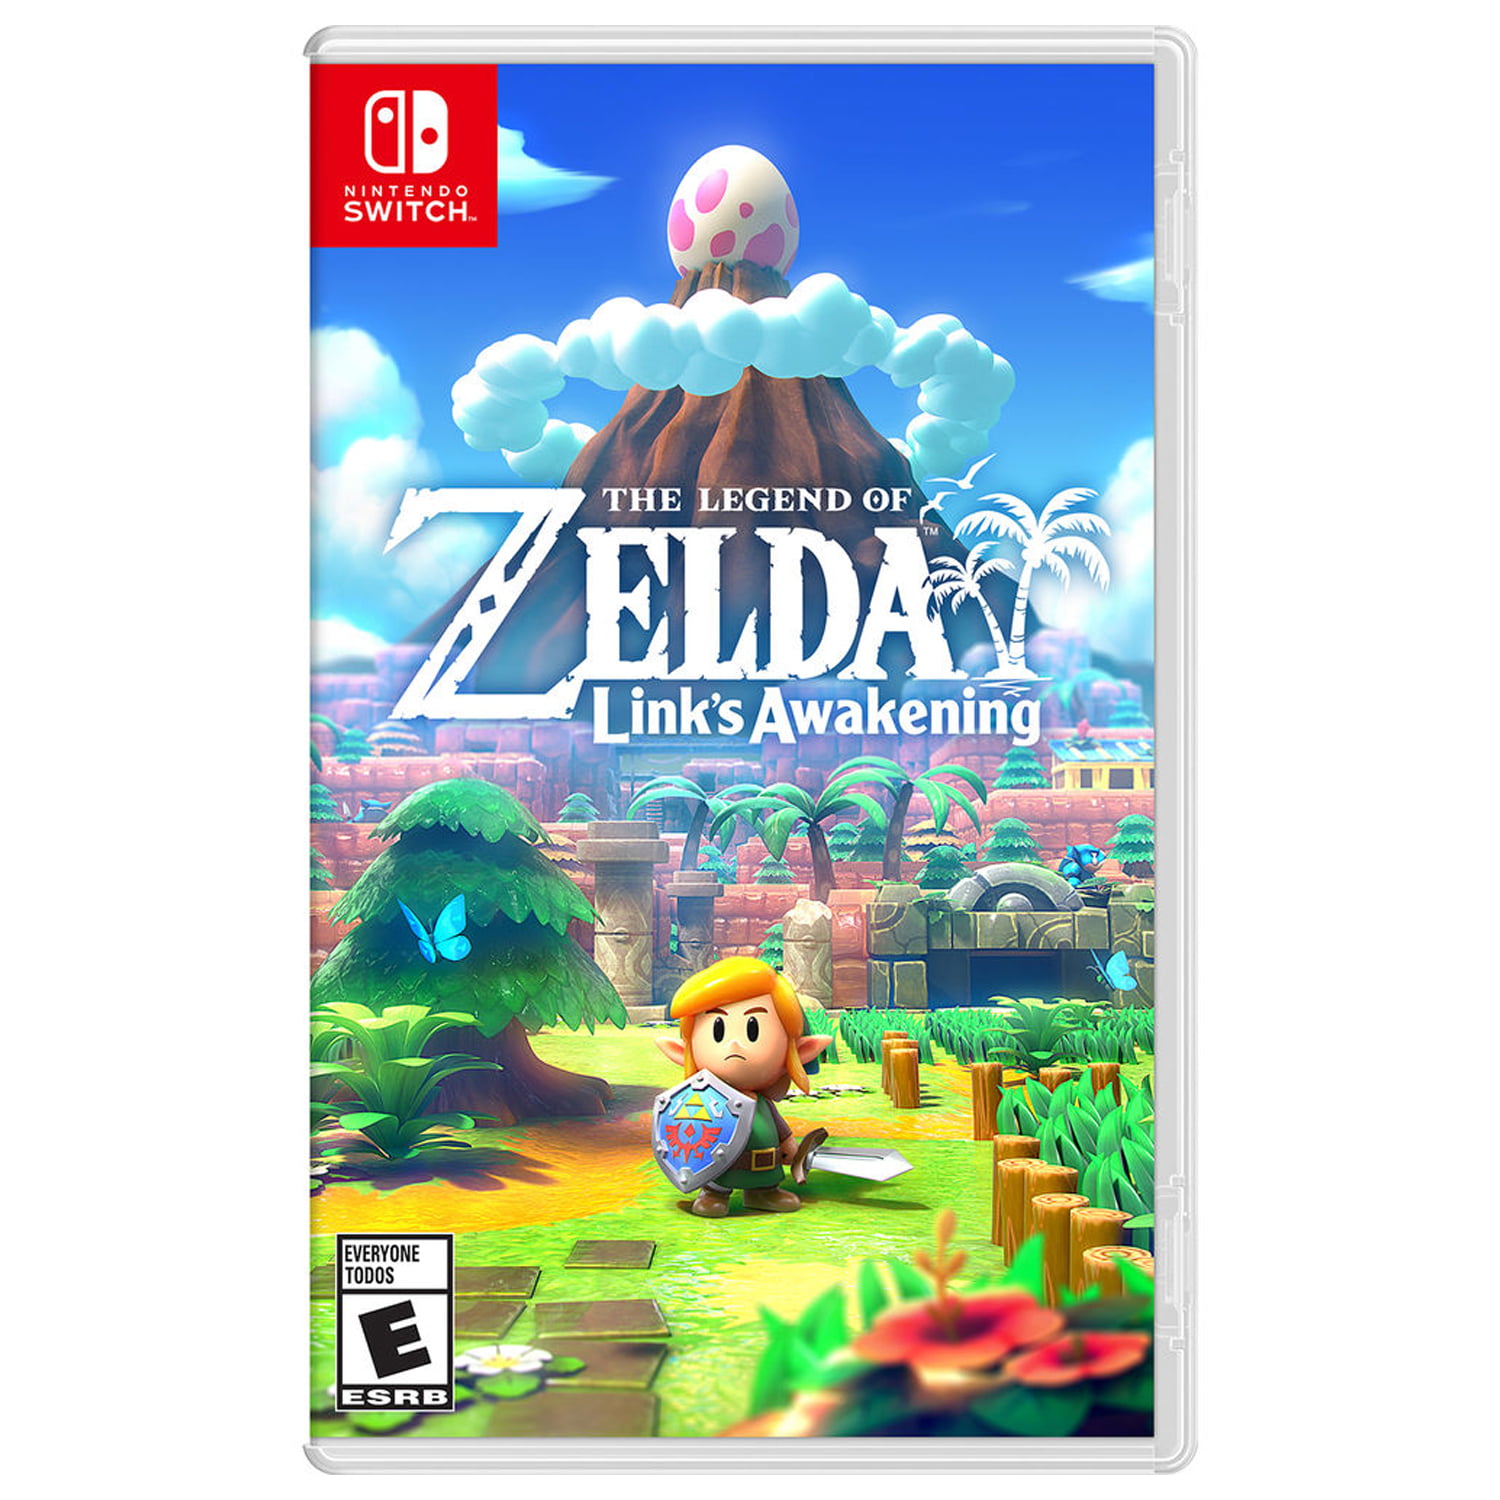 Nintendo Wii U Deluxe Desbloqueado C Jogos Mario Zelda Pokemon